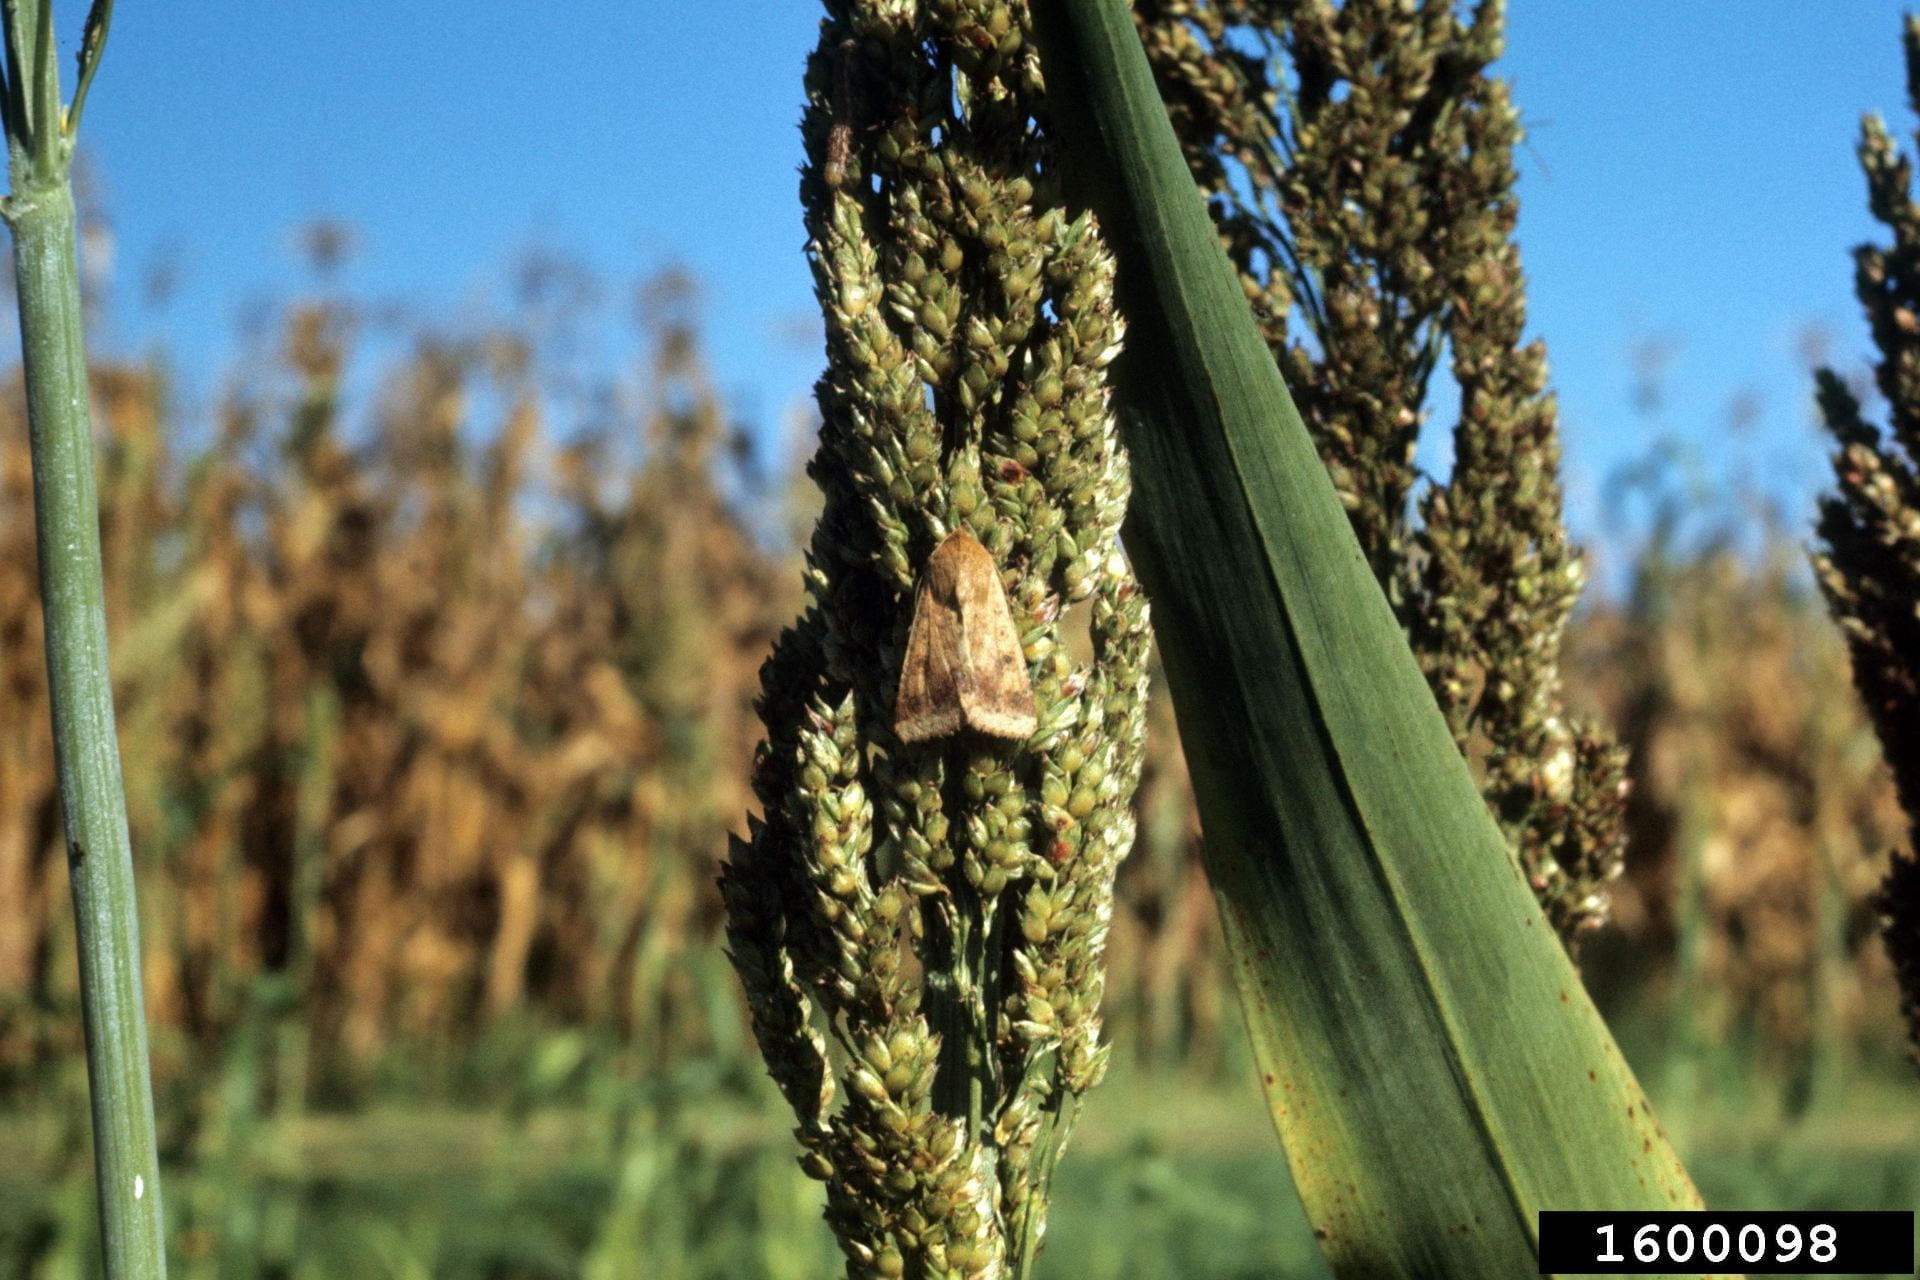 Corn earworm female in sorghum. Image: John C. French Sr